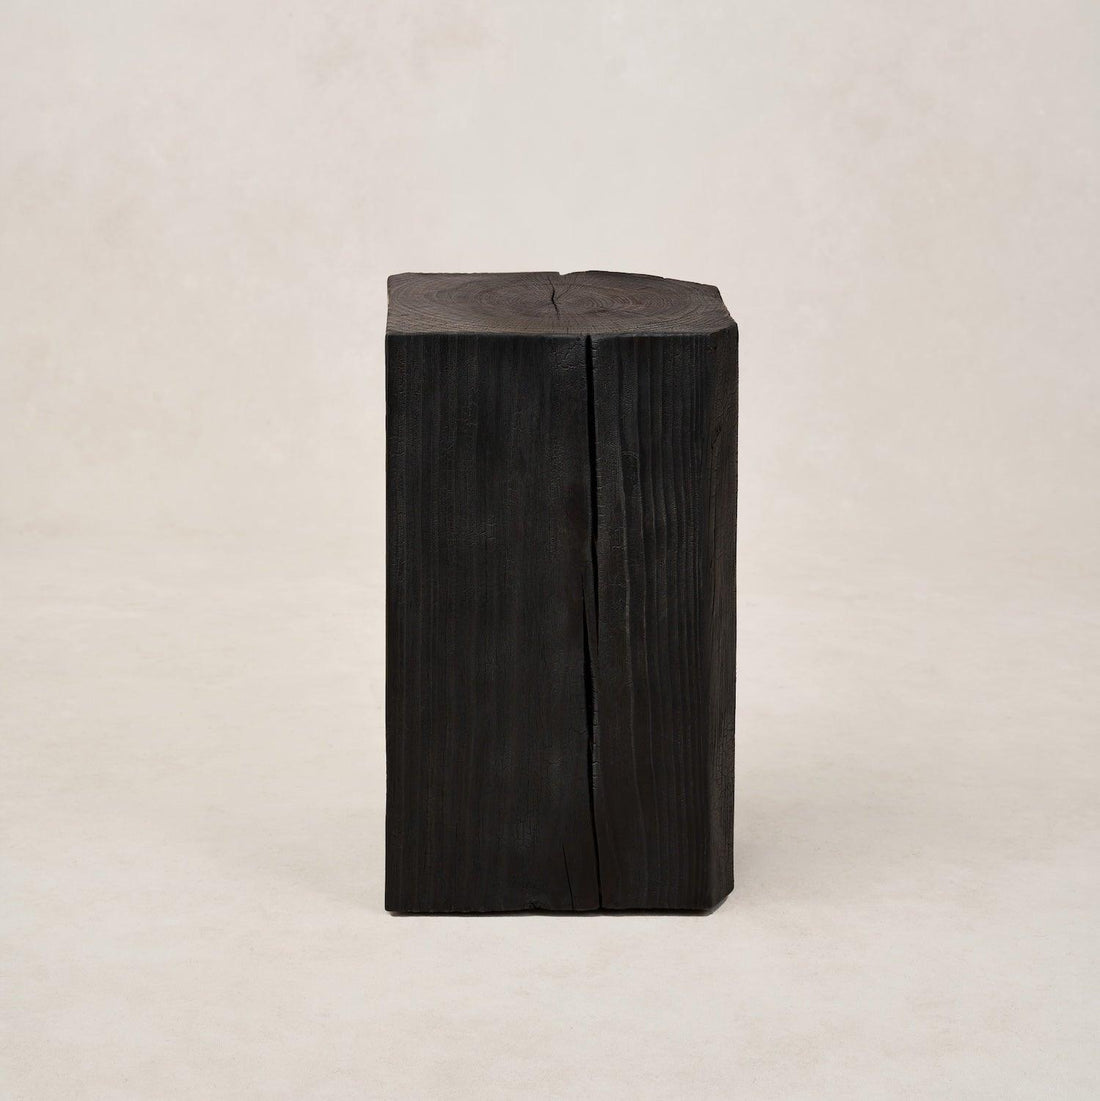 Charcoal Sculpture Pedestal - Medium